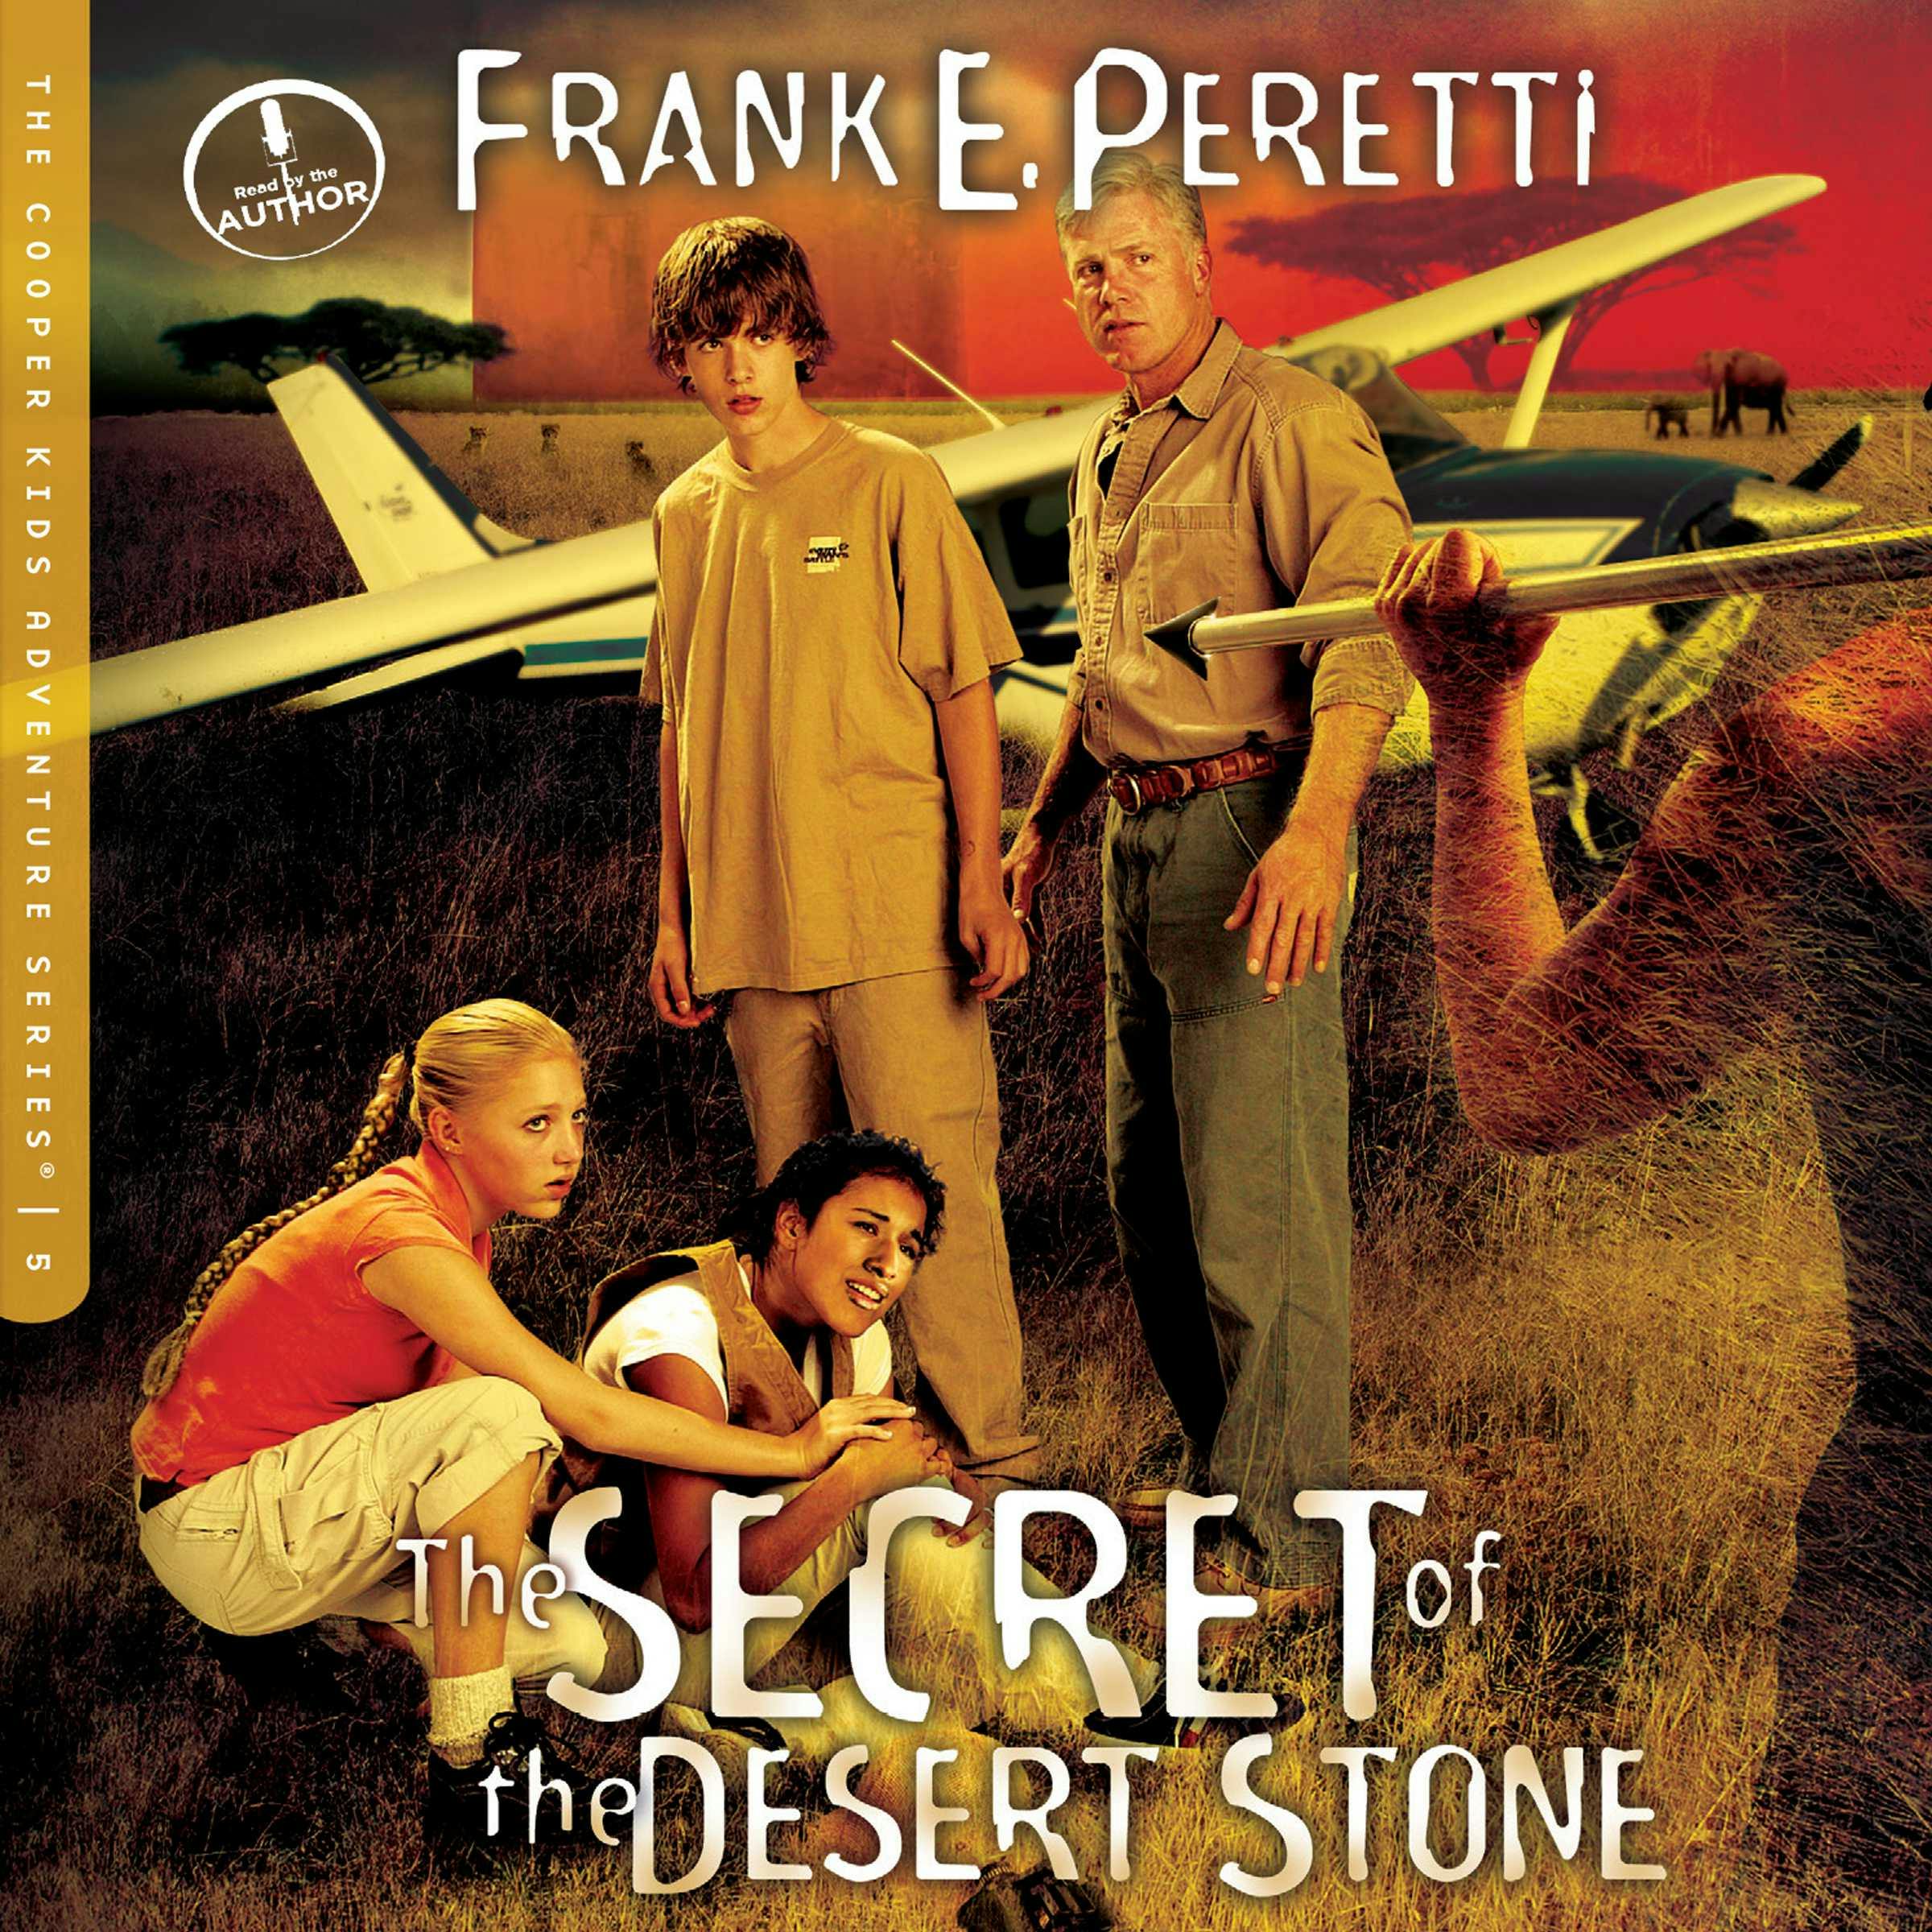 The Secret of the Desert Stone - undefined